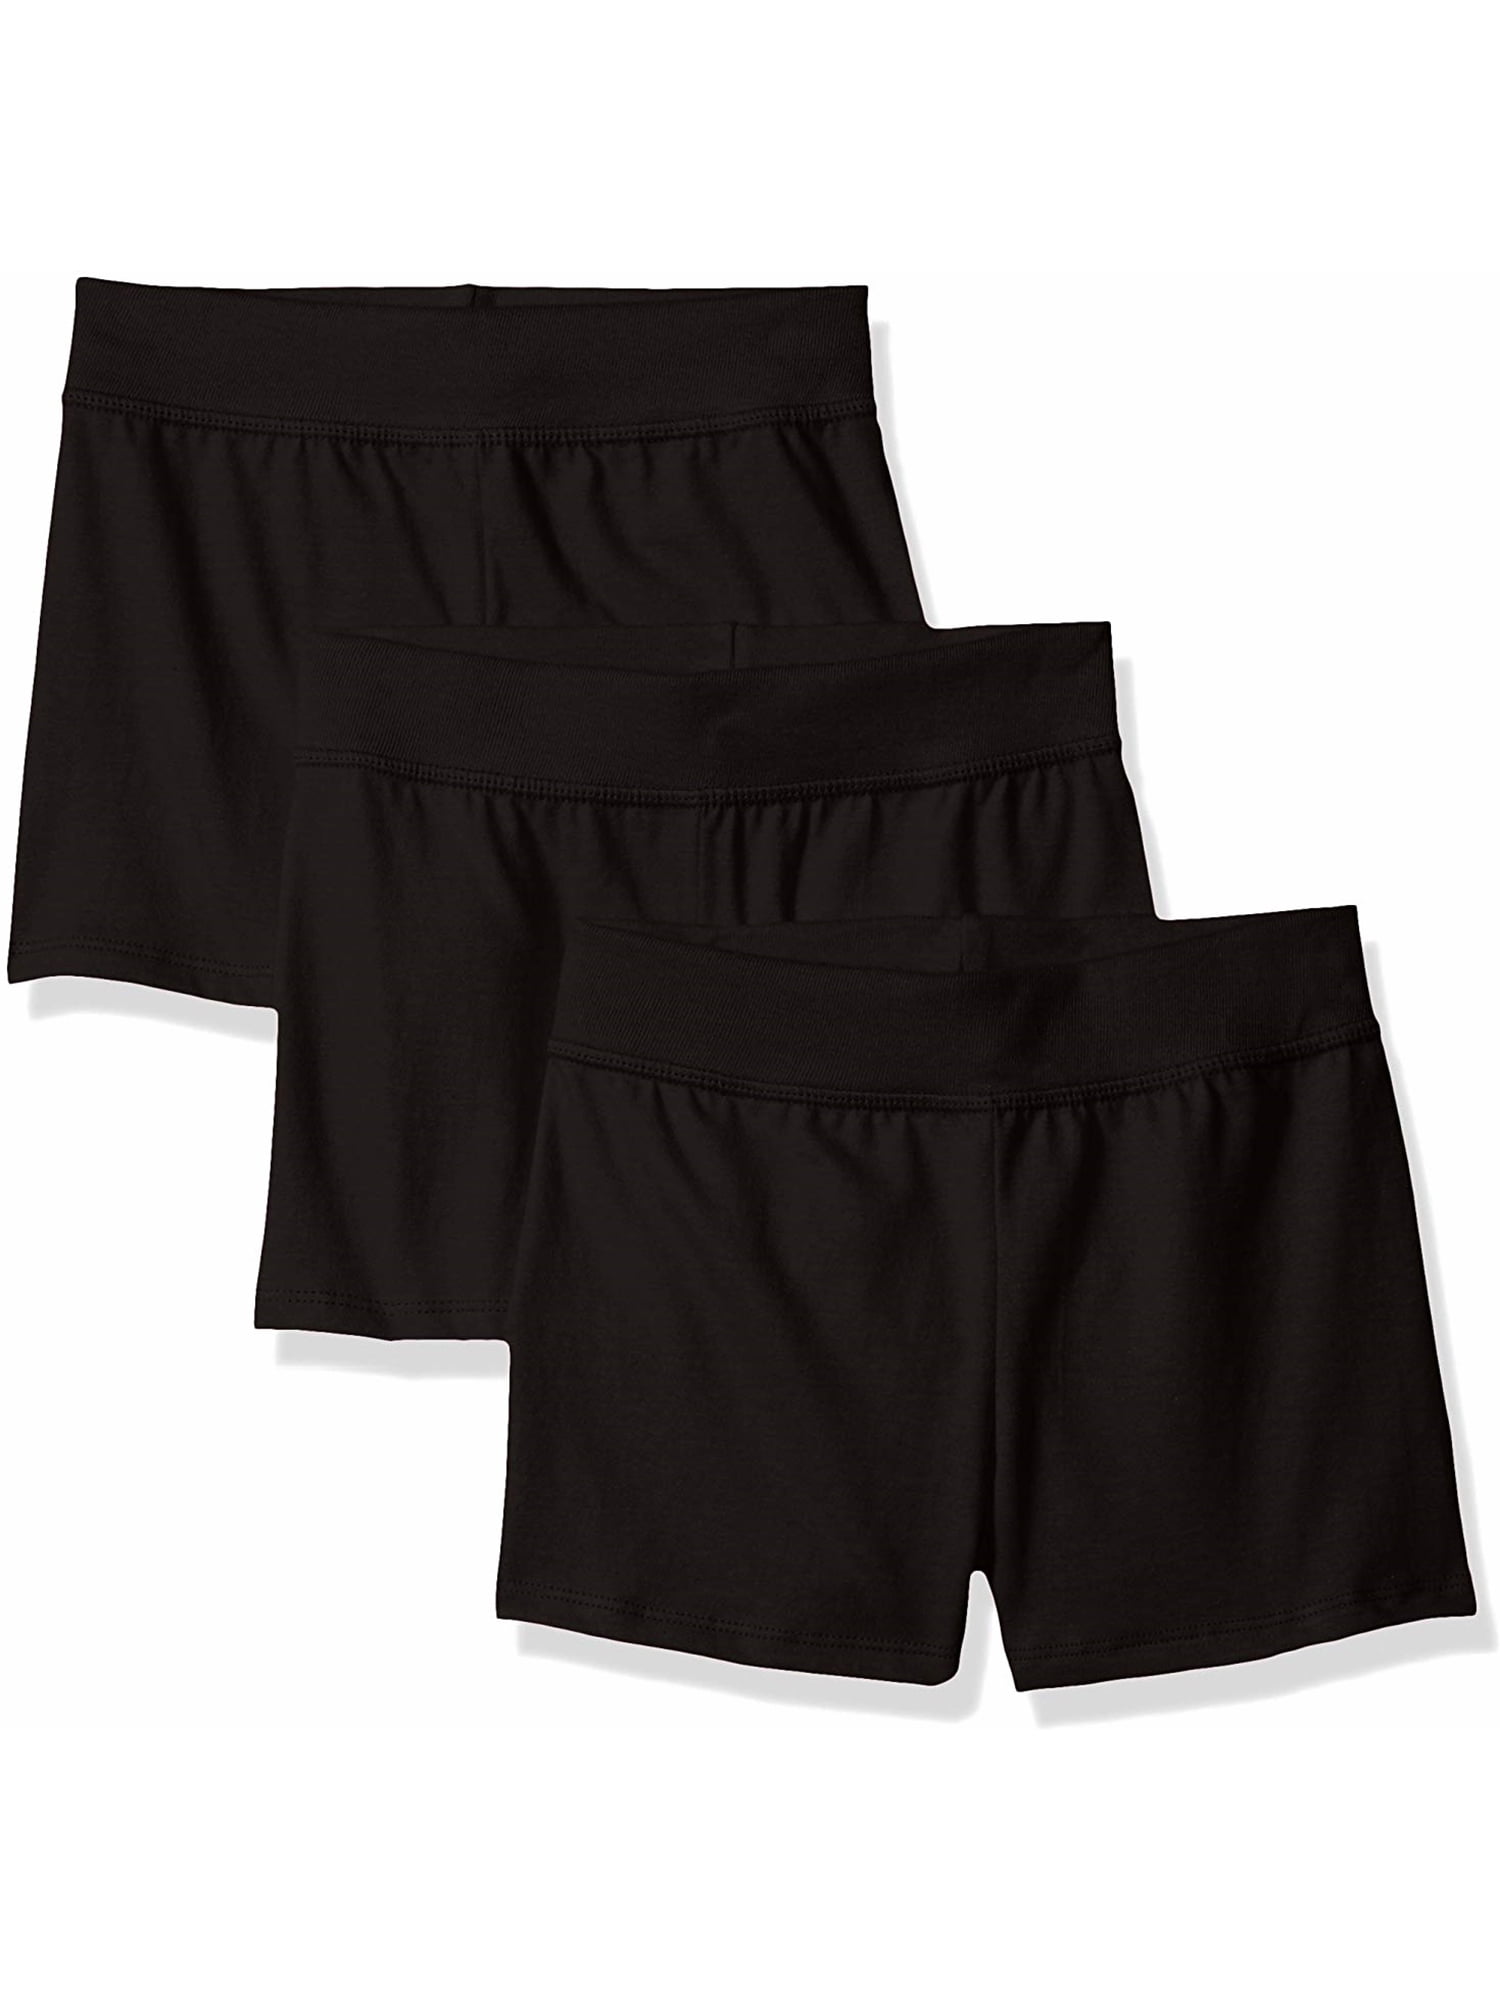 Hanes Girls Jersey Shorts, 3-Pack, Sizes 4-16 - Walmart.com